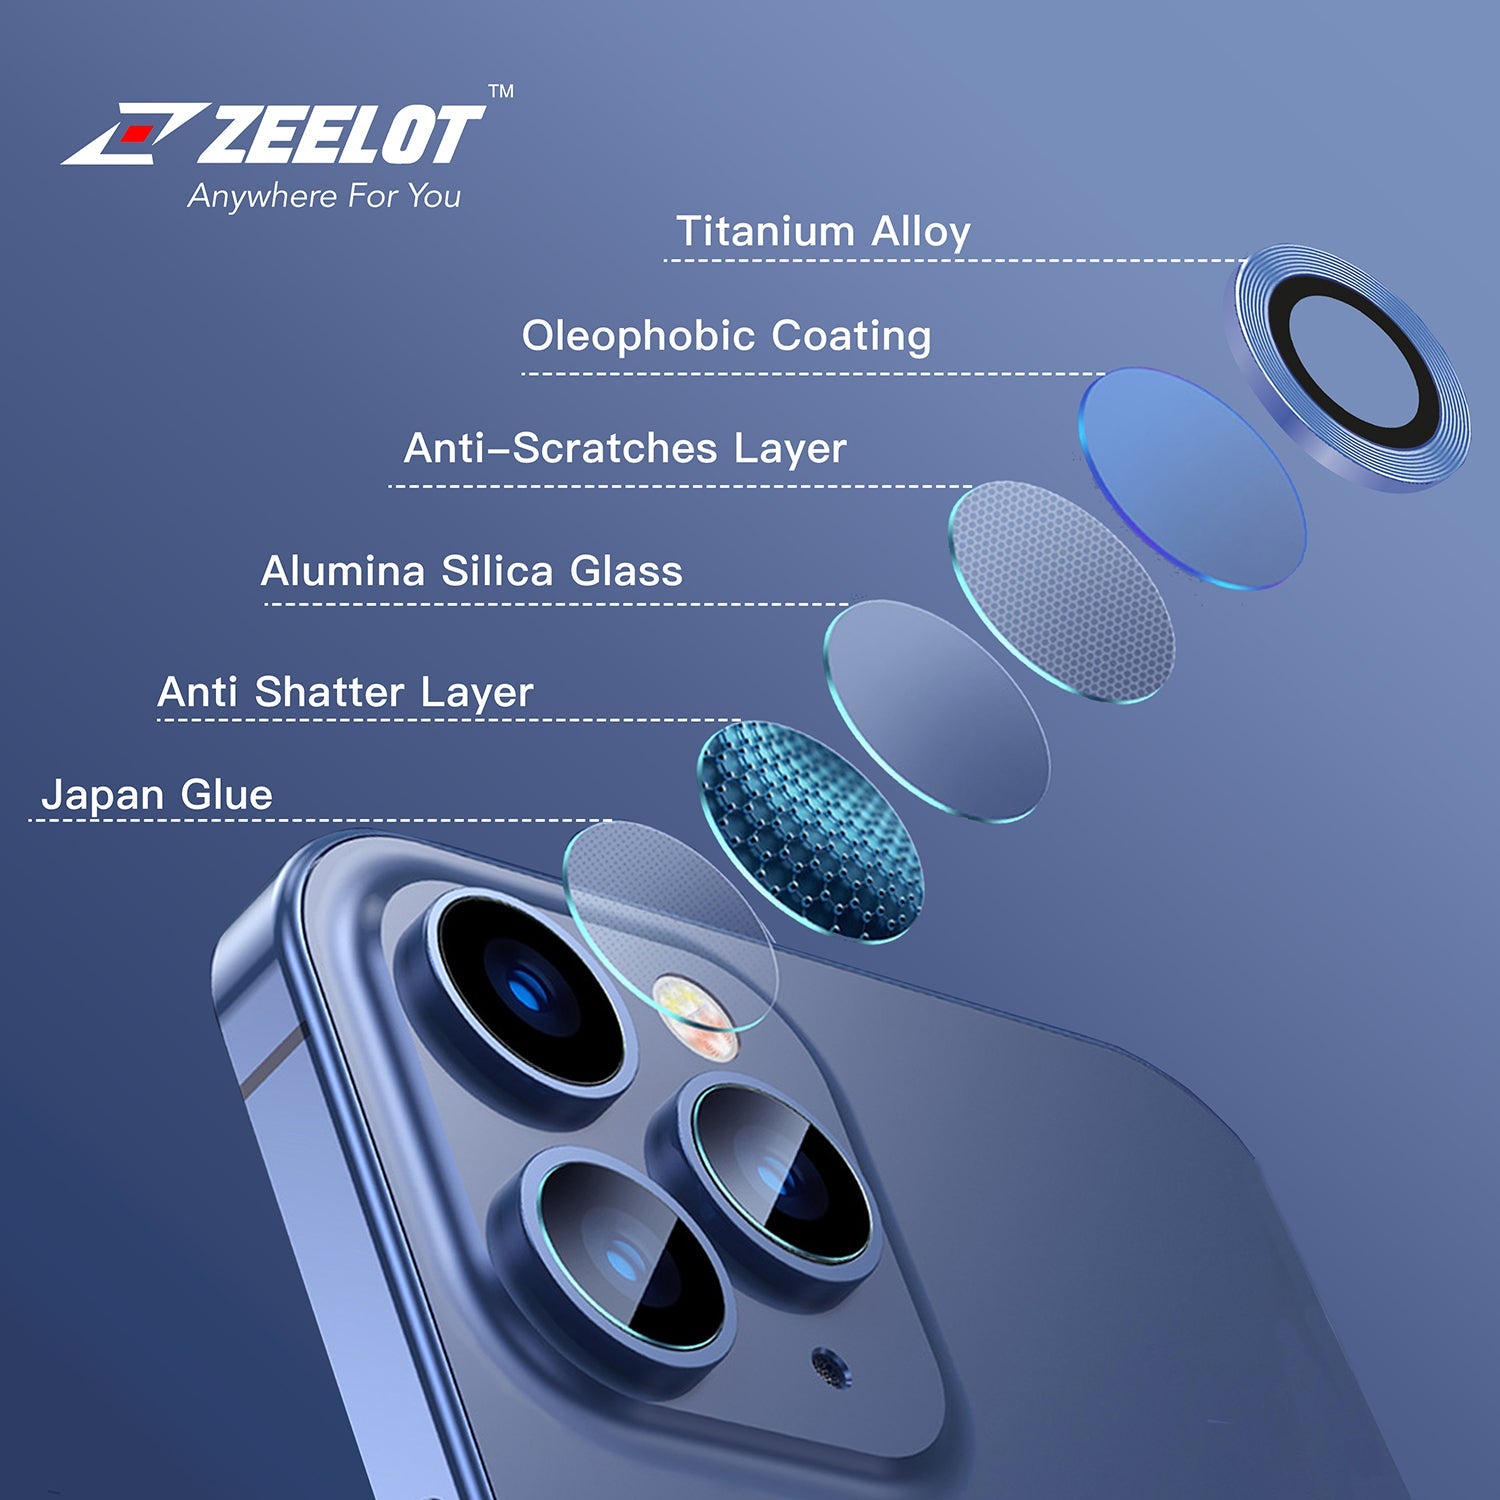 ZEELOT Titanium Steel Diamond Design with Lens Protector for iPhone 12 Pro Max 6.7" (Three Cameras), Black Default ZEELOT 